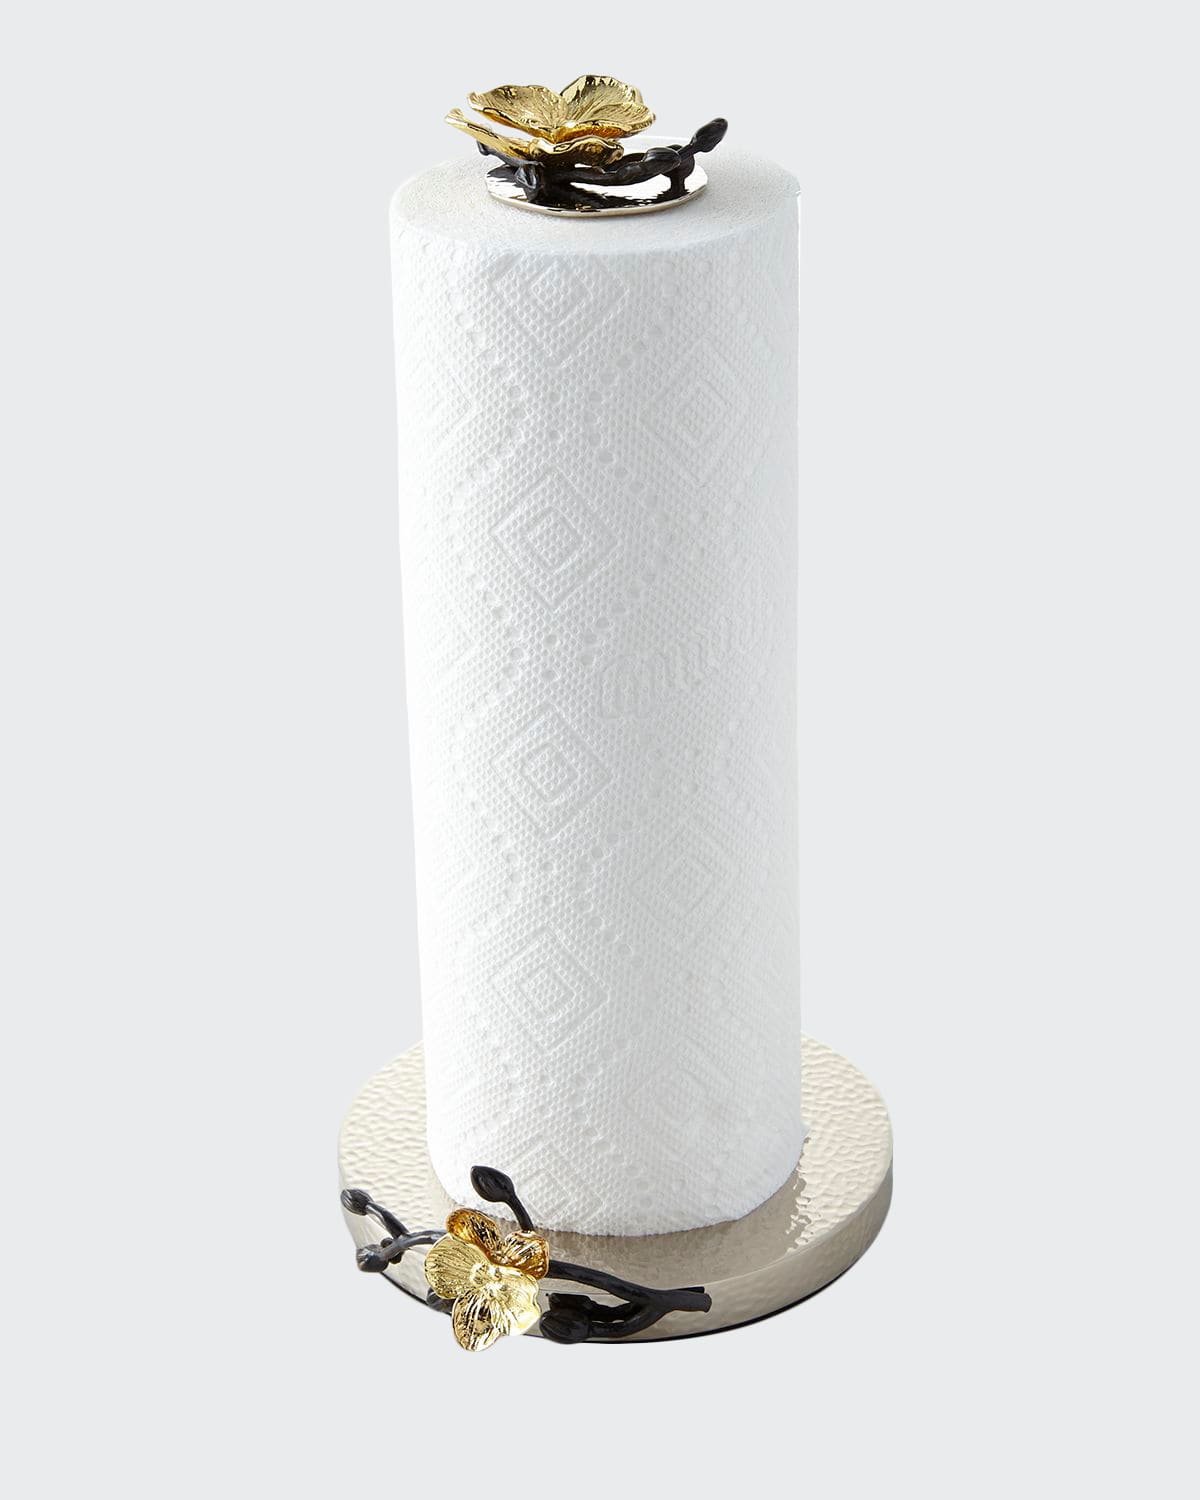 Michael Aram Gold Orchid Paper Towel Holder